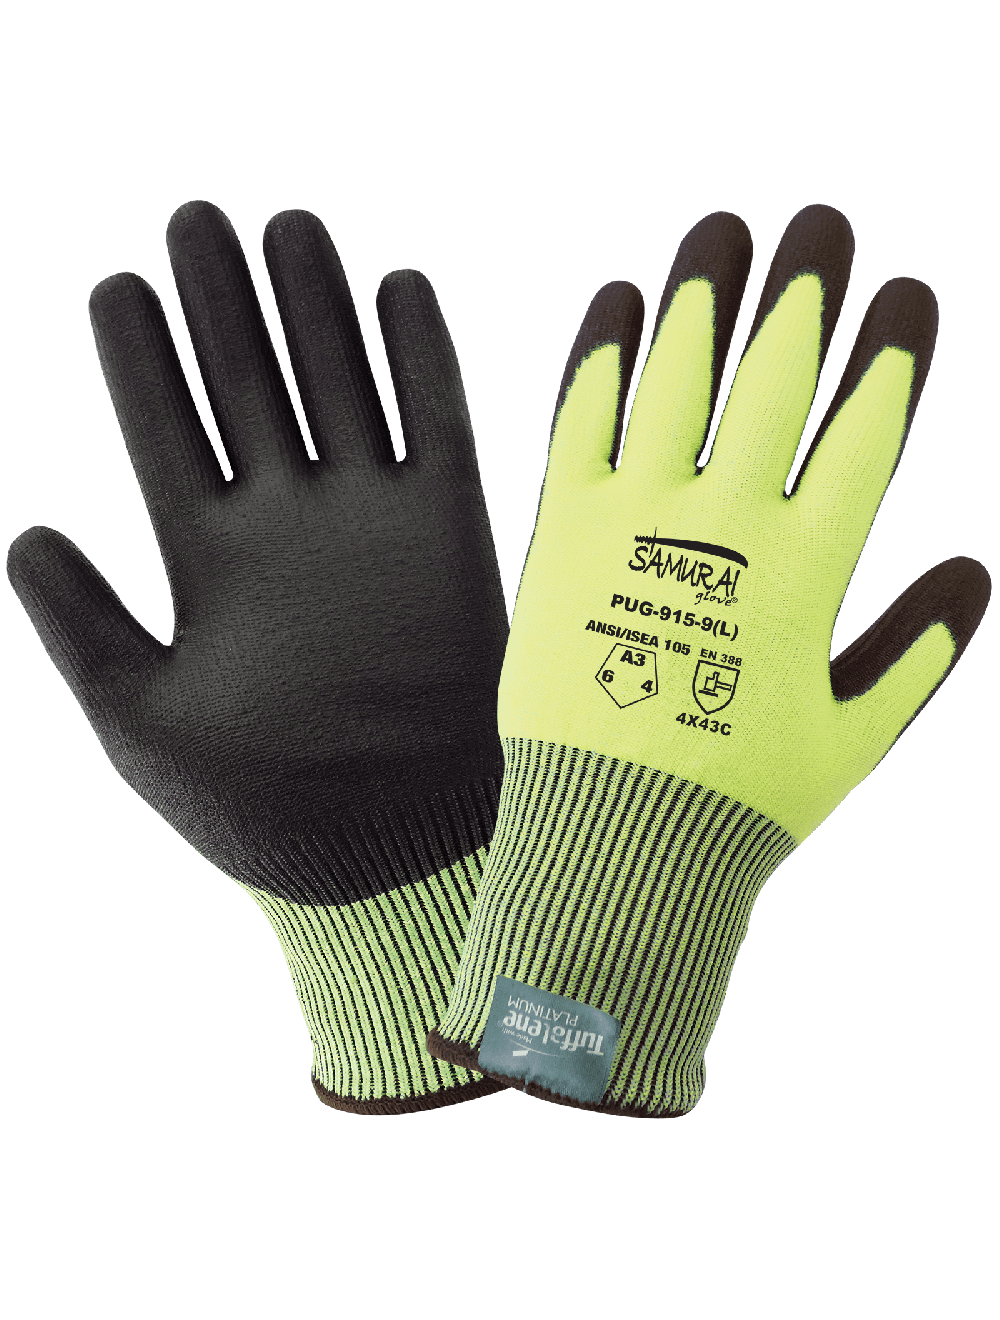 Samurai Glove® Cut Resistant, High-Visibility 15-Gauge Tuffalene® Platinum Polyurethane Coated Gloves - PUG-915